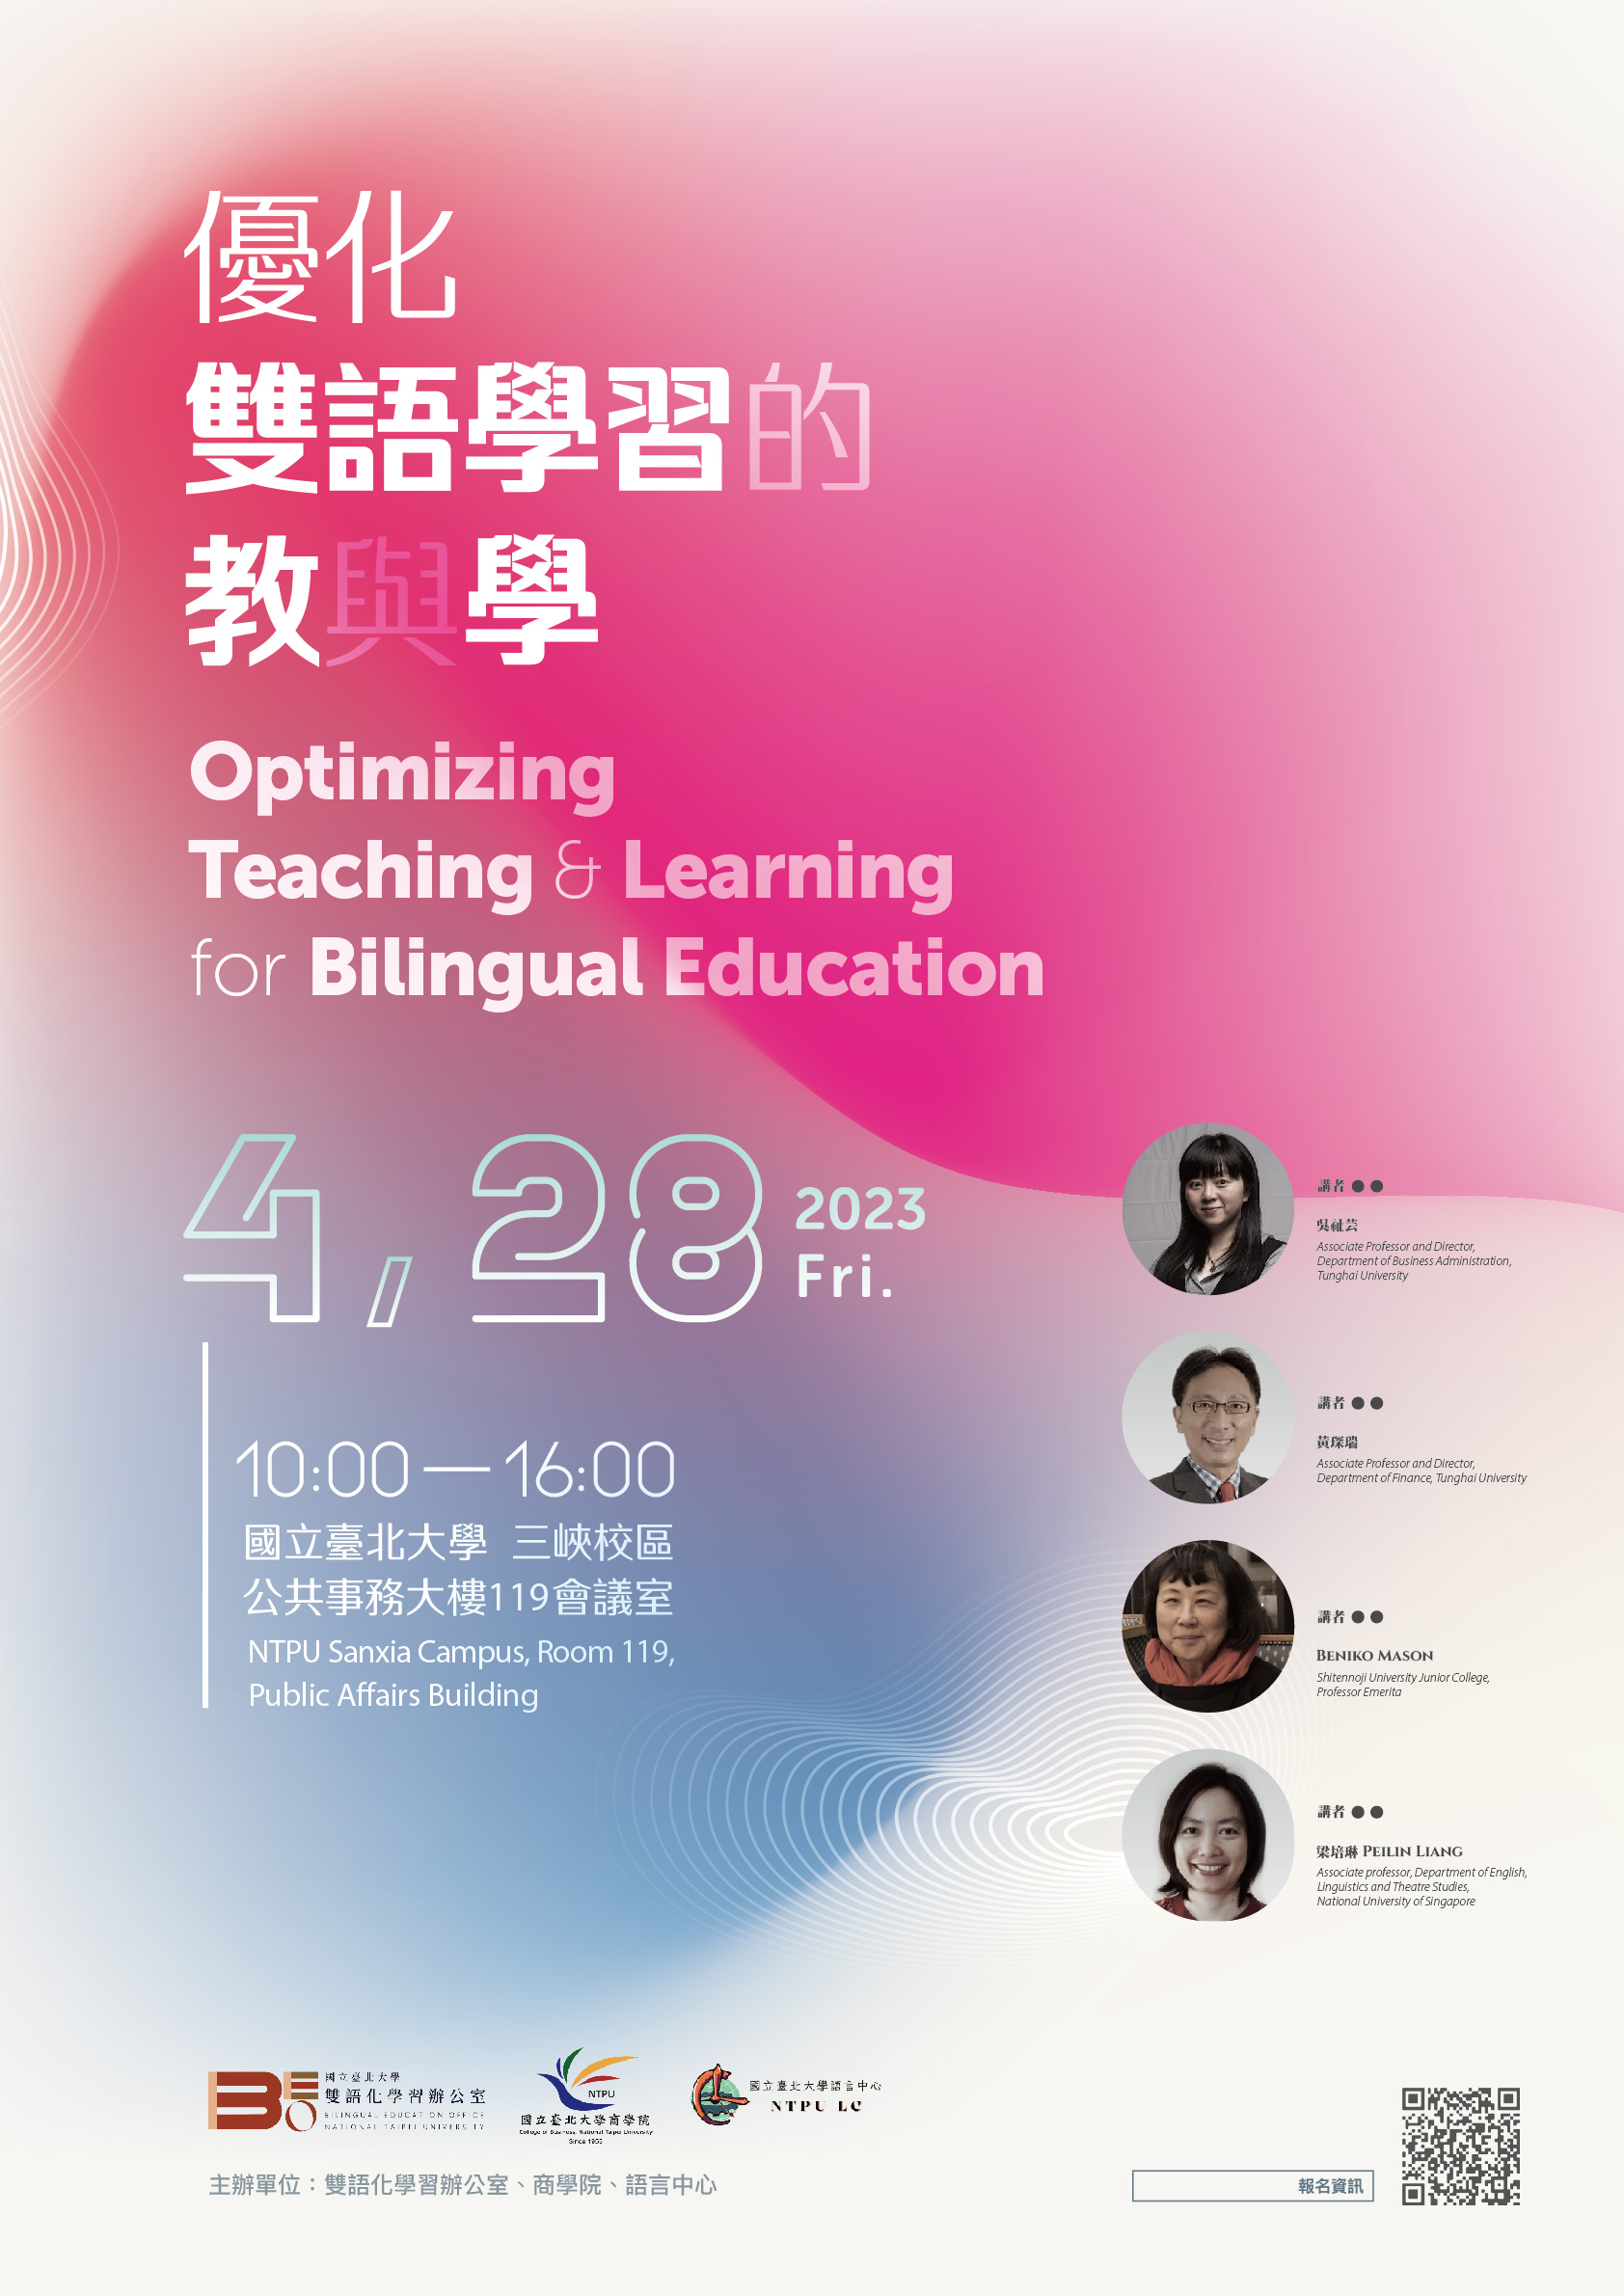 2023 EMI 論壇 ：「優化雙語學習的教與學 (Optimizing Teaching and Learning for Bilingual Education)」活動圓滿成功